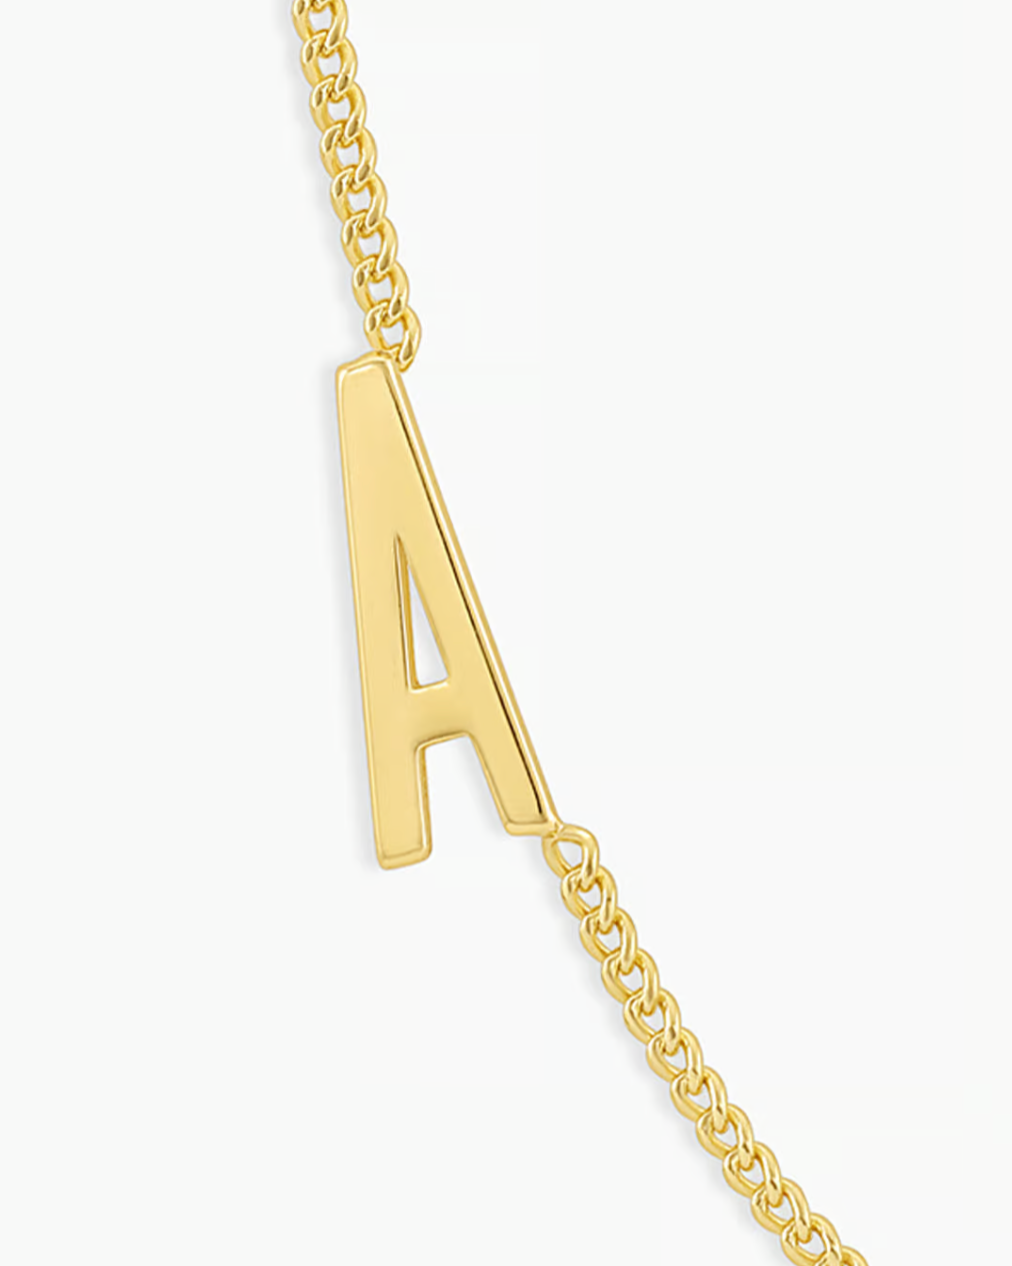 Wilder alphabet bracelet - A